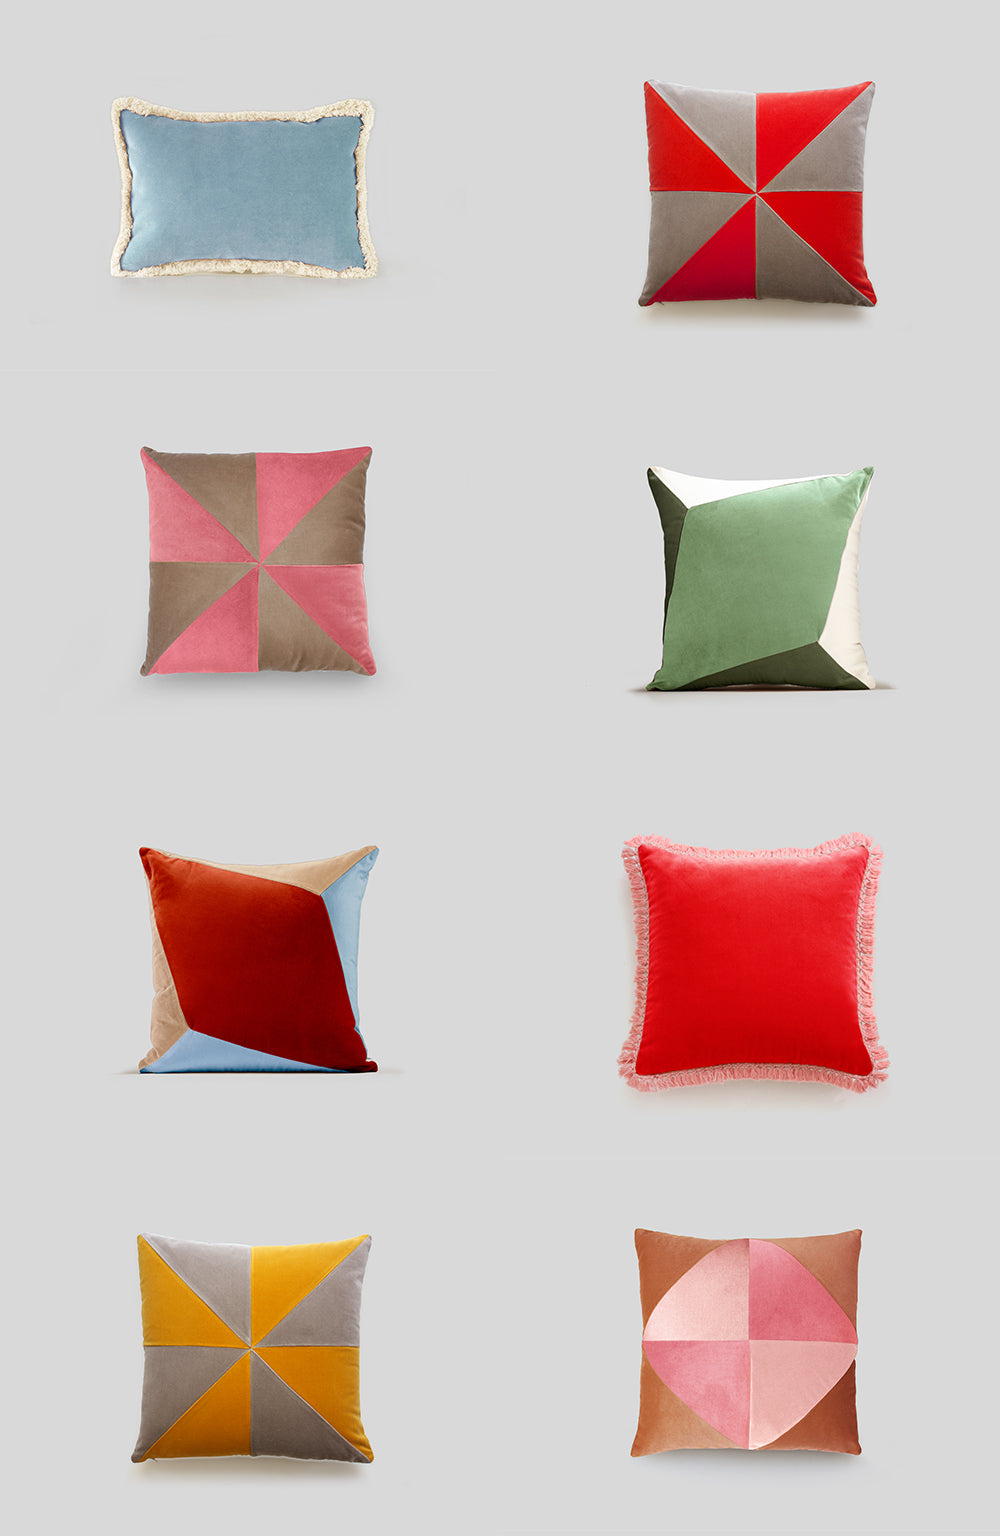 Discover the new Velvet Luxury cushions